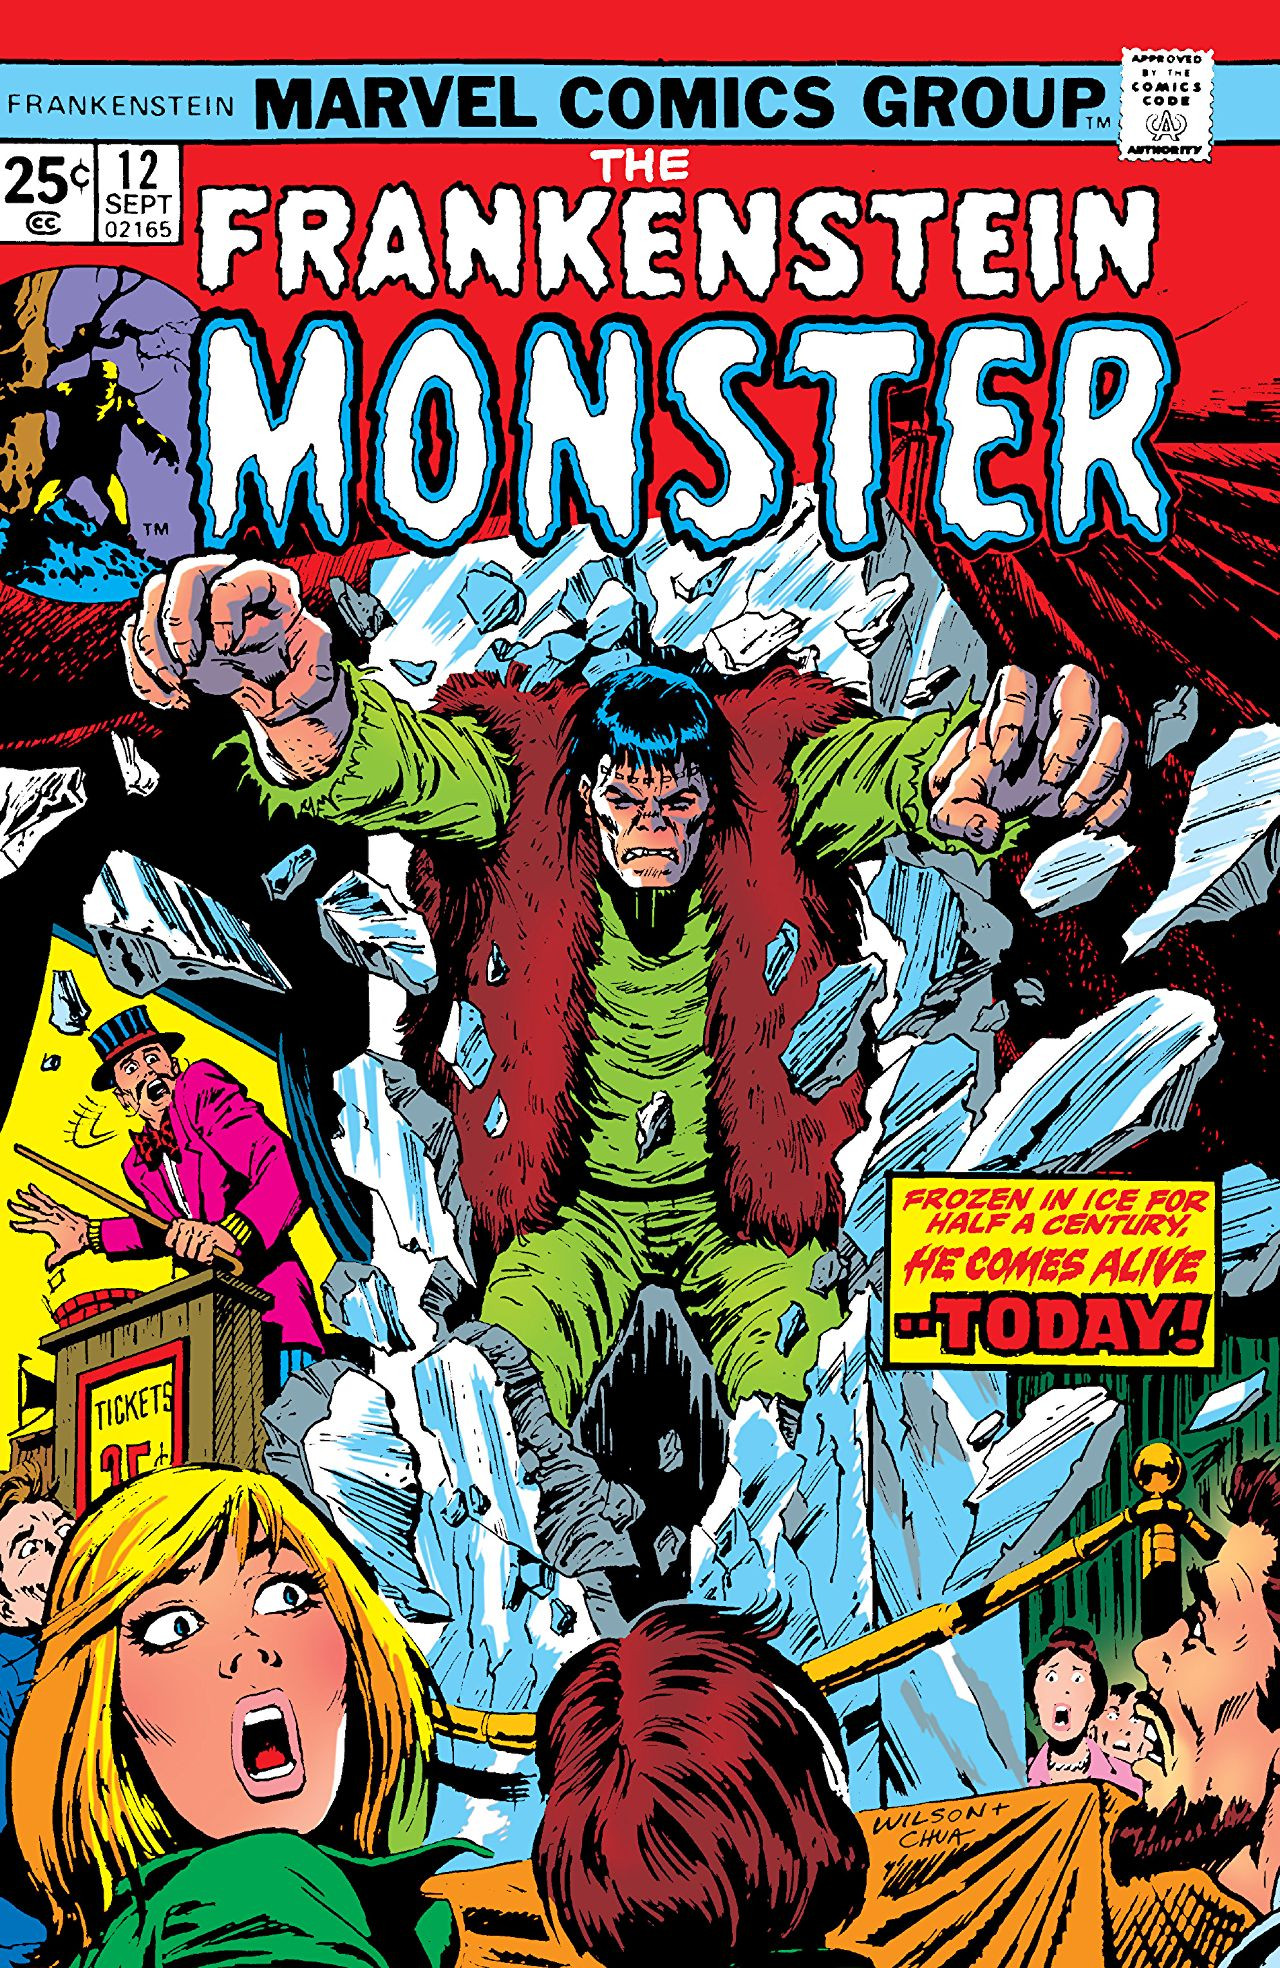 Frankenstein Vol 1 12 | Marvel Database | FANDOM powered by Wikia